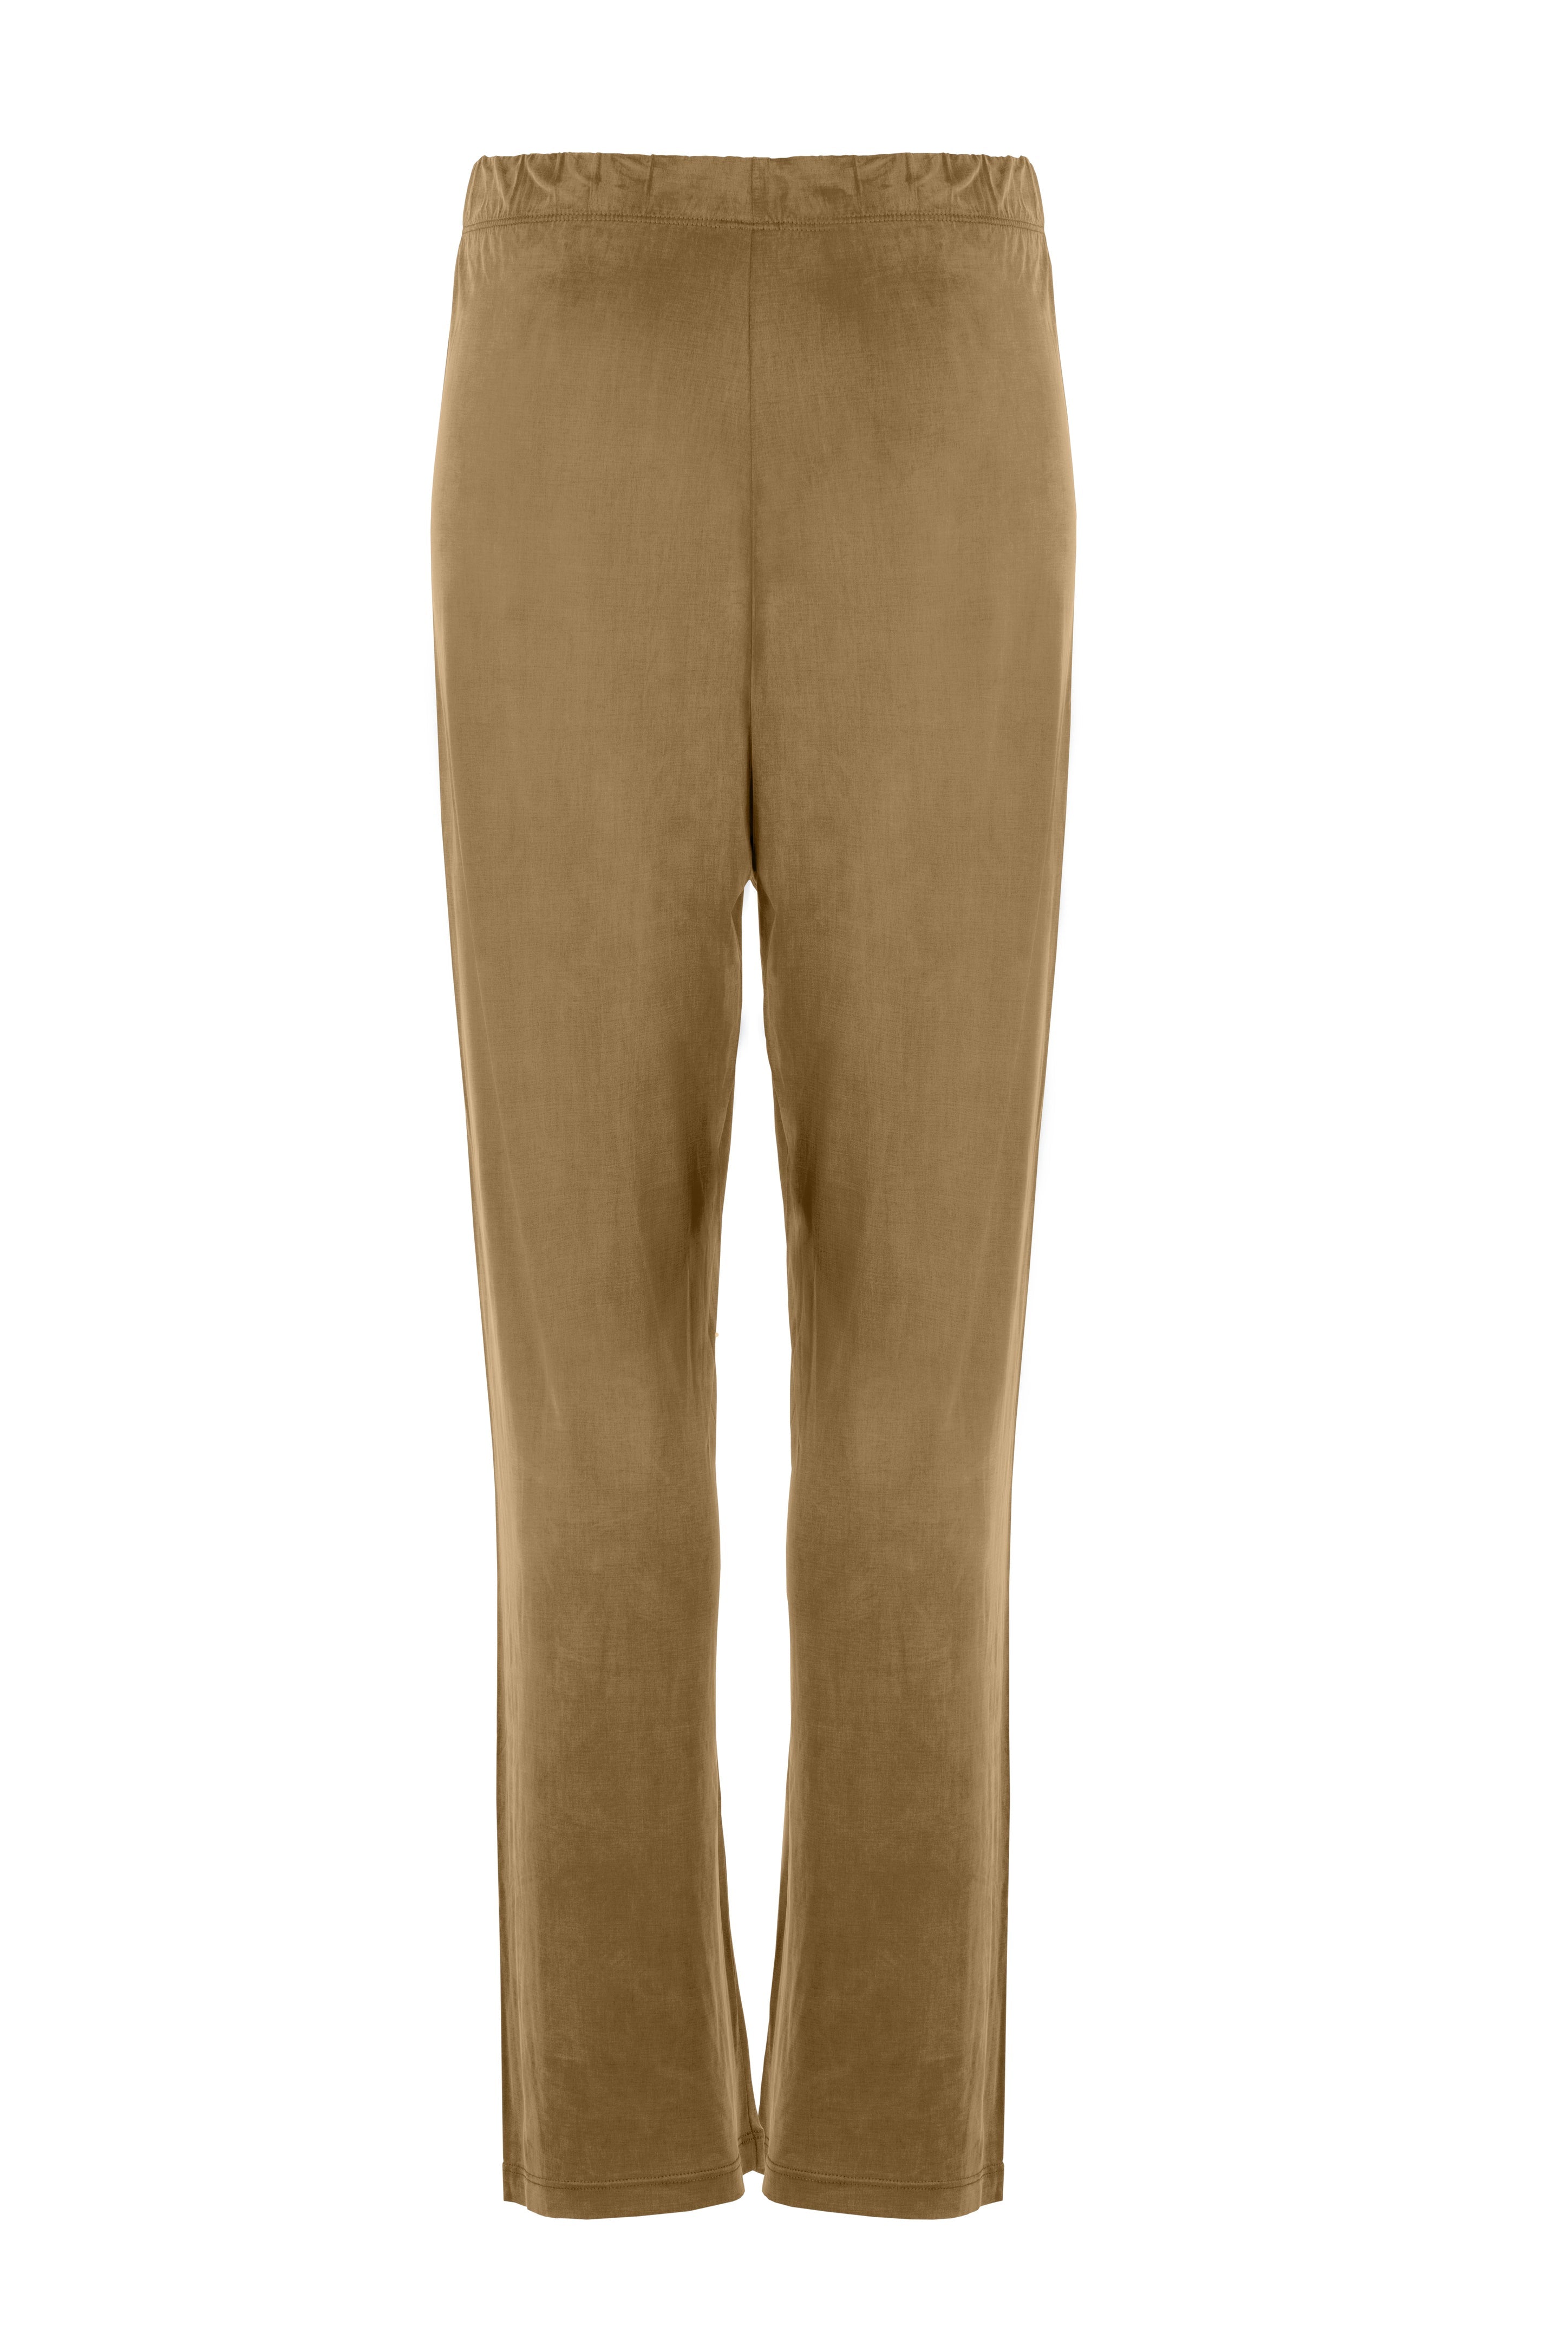 Pantalon taille haute marron en cupro par MOYA KALA